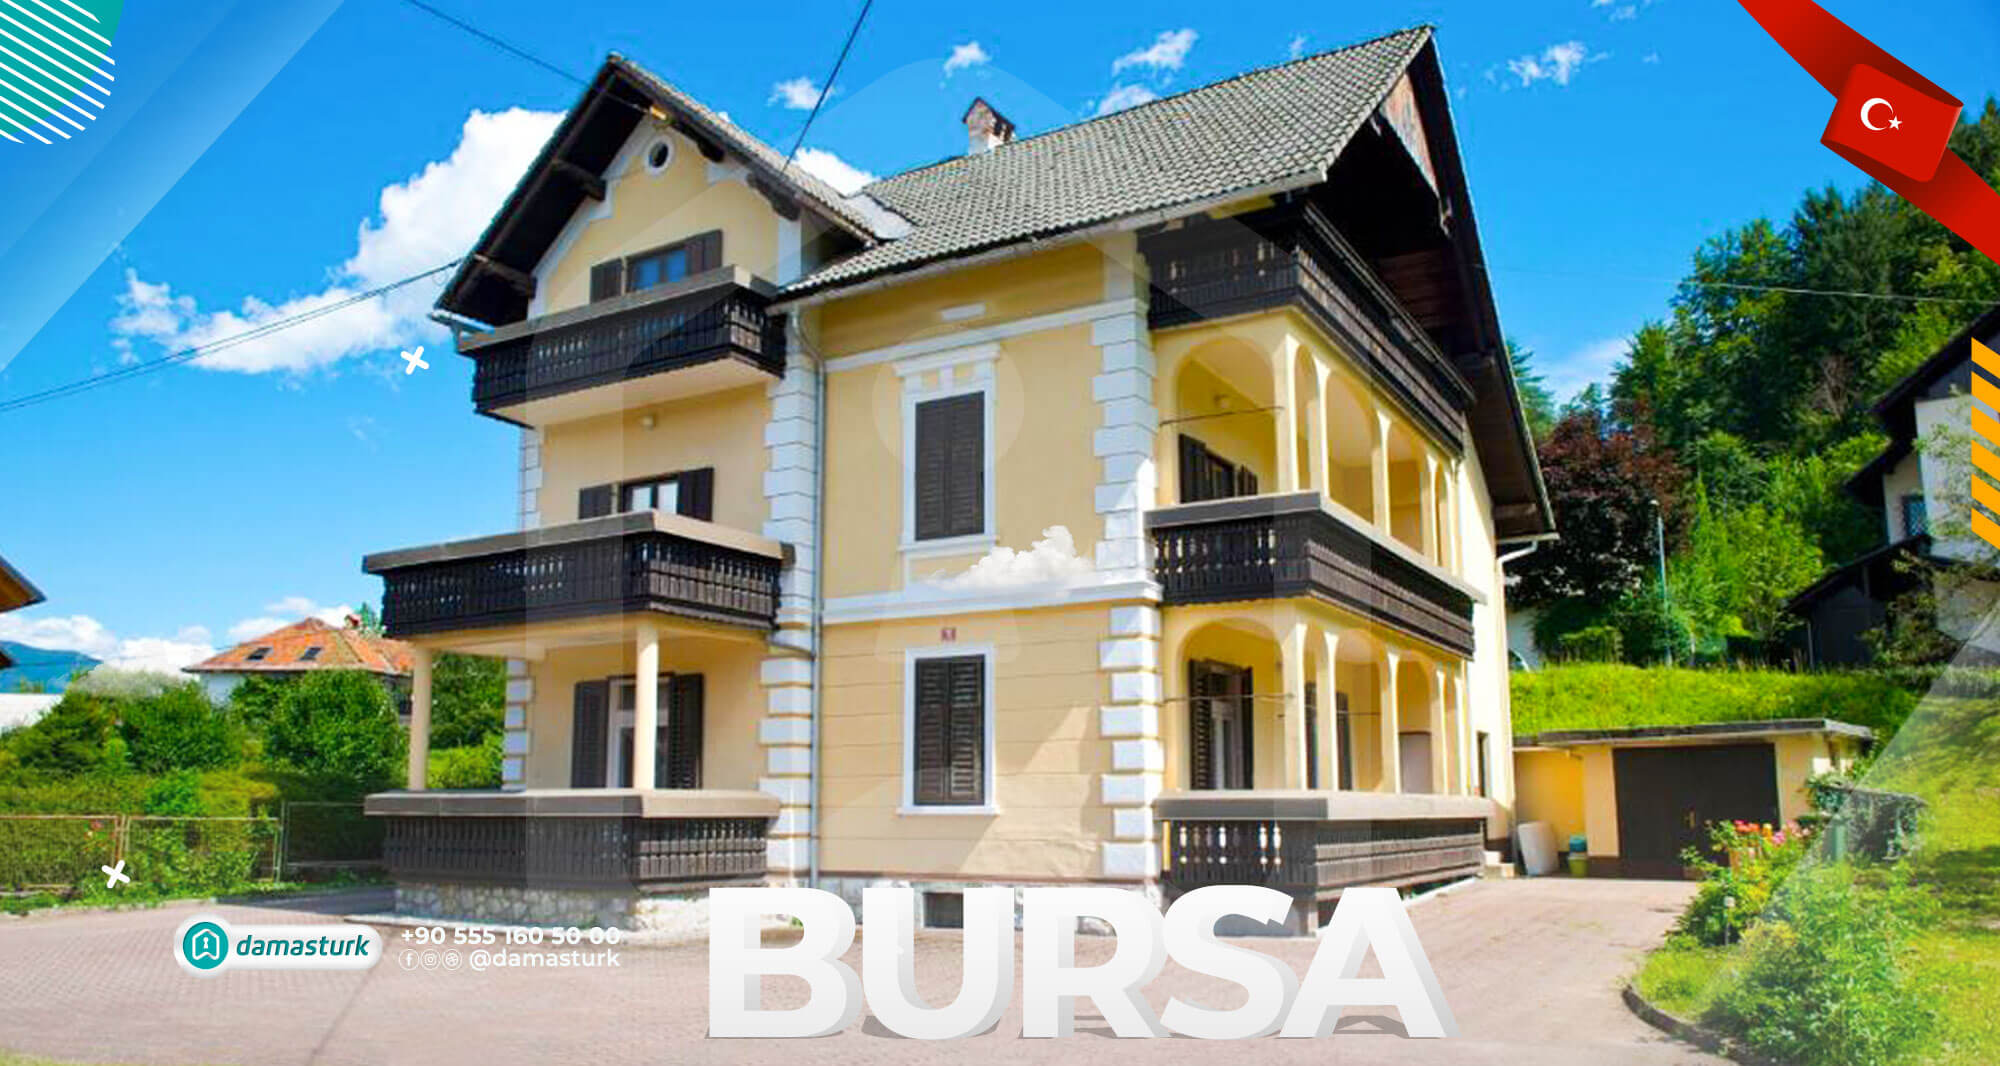 Villas for sale in Bursa 2022